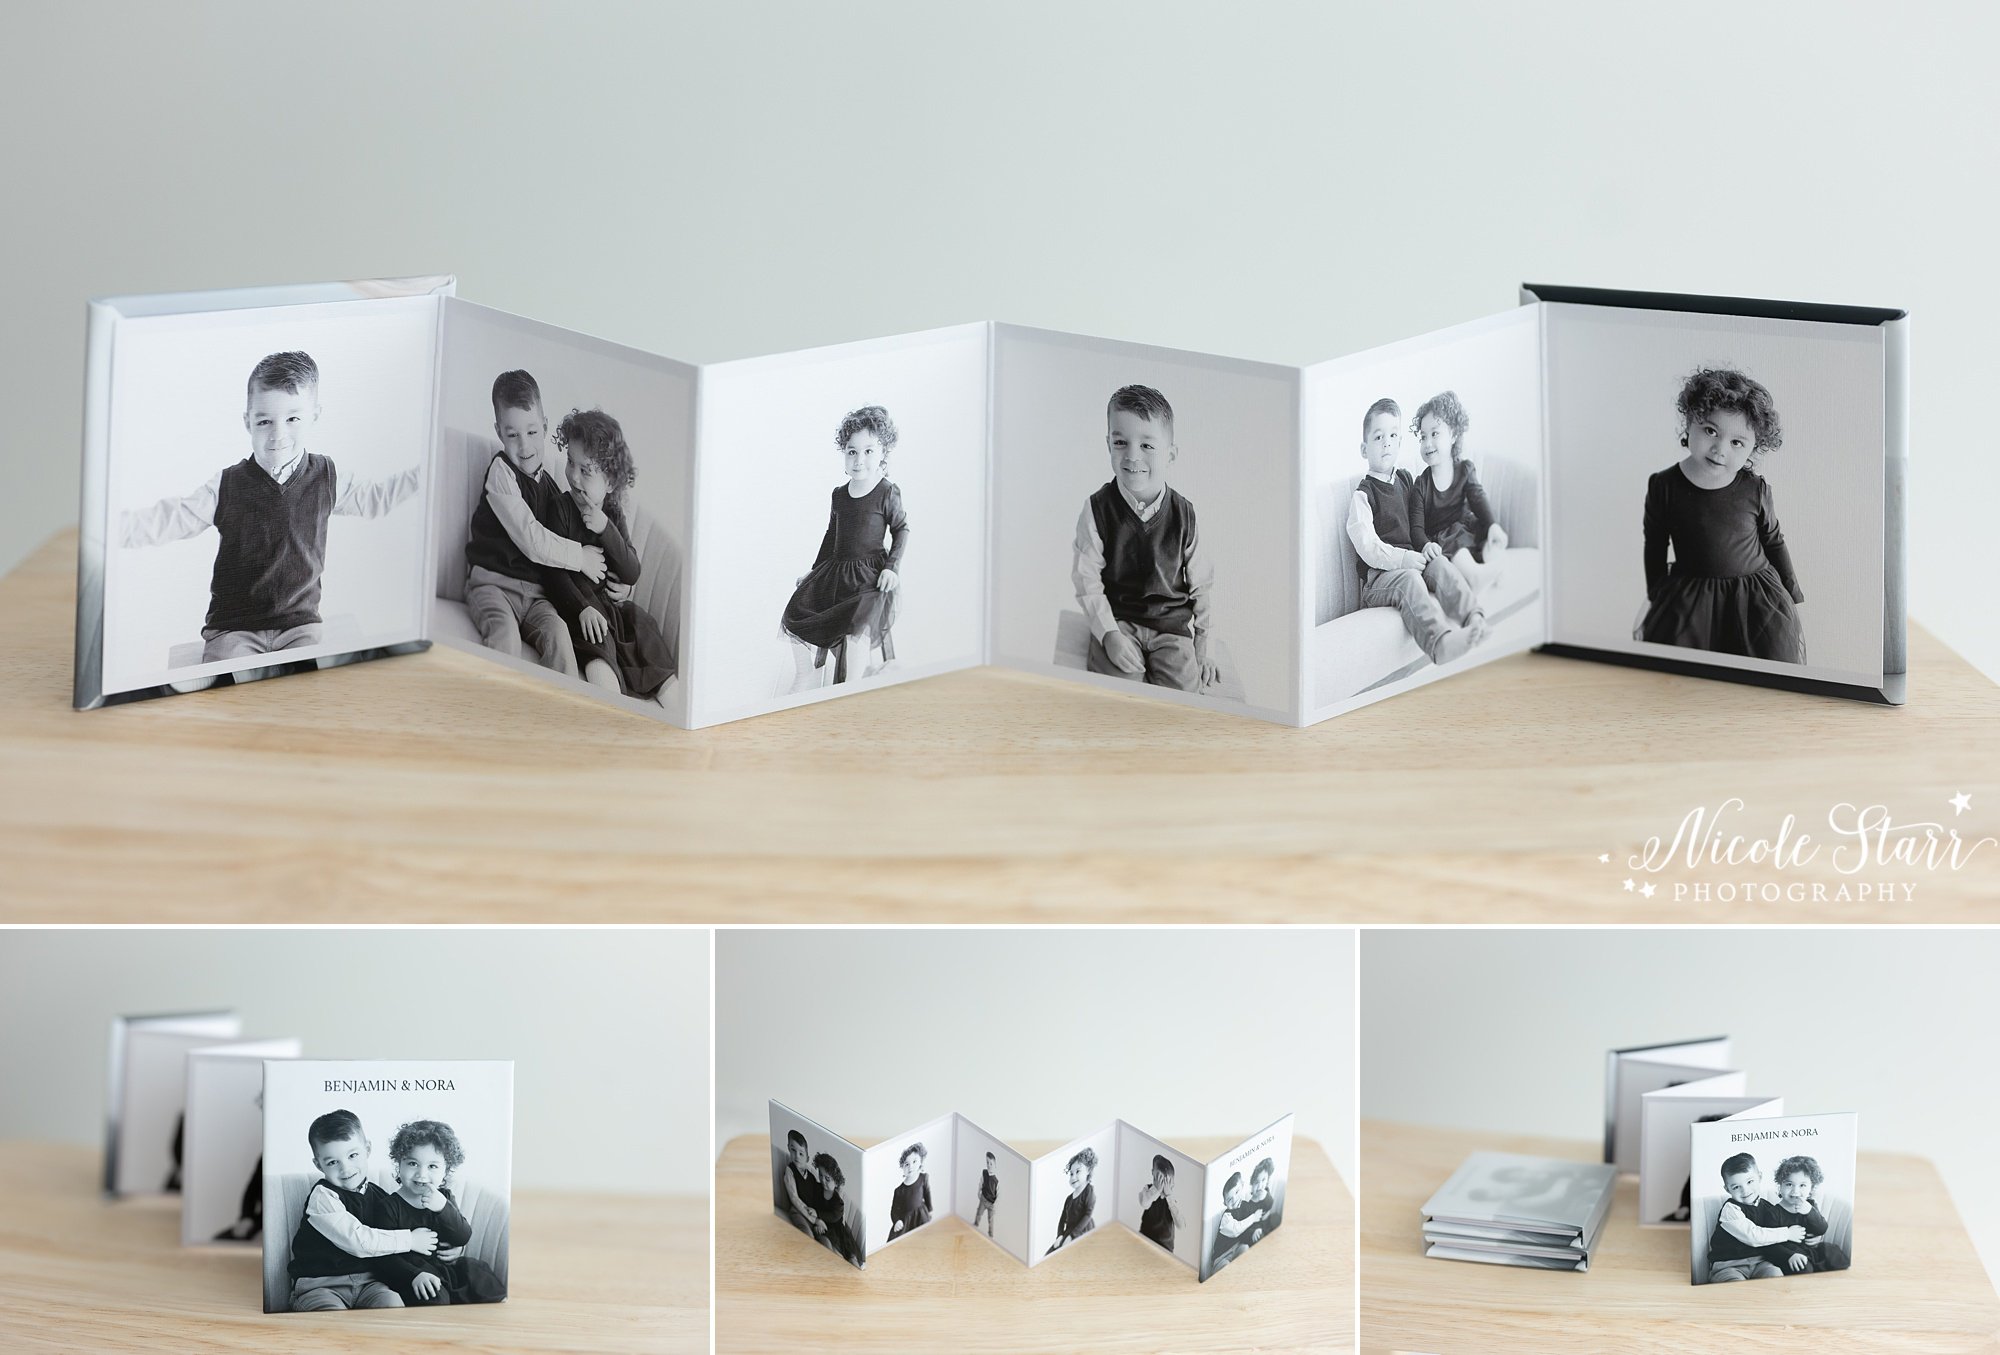 Small Photo Album 4x6 Holds 24 Ideal for Photobook or Theme-Photos(Black/inner White)